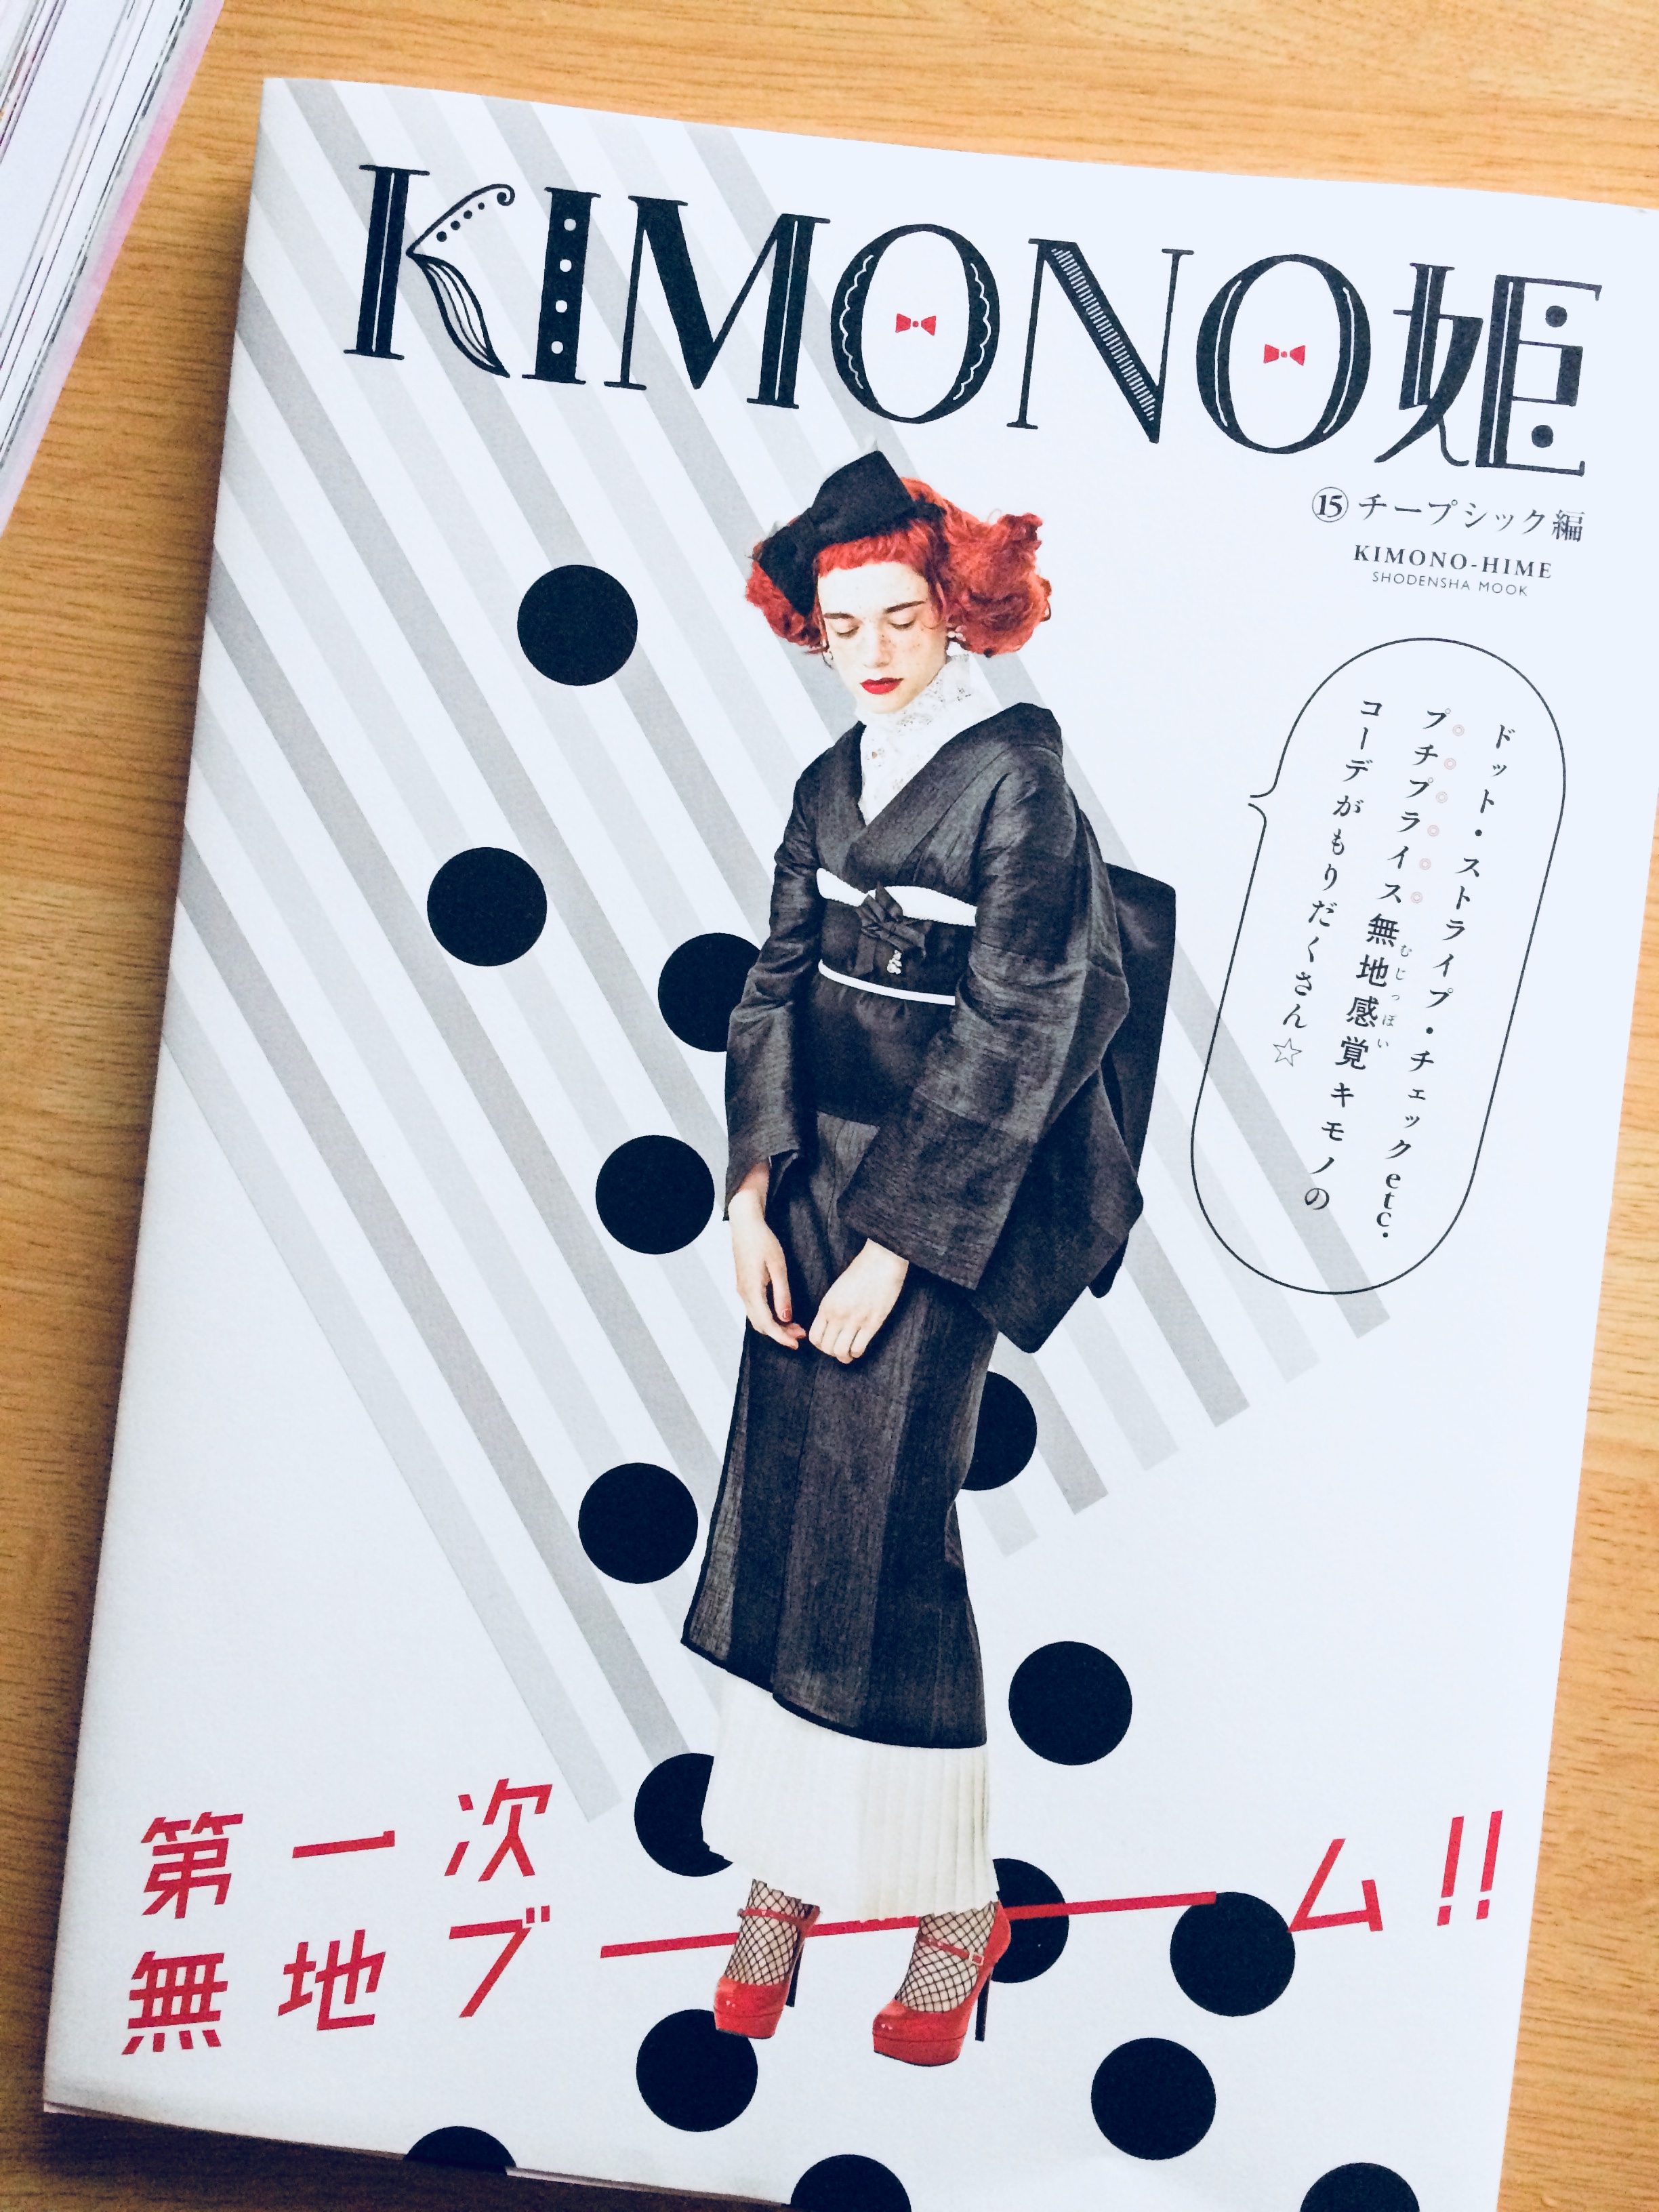 KIMONO姫⑮ 表紙にホムシュヘムが登場です！